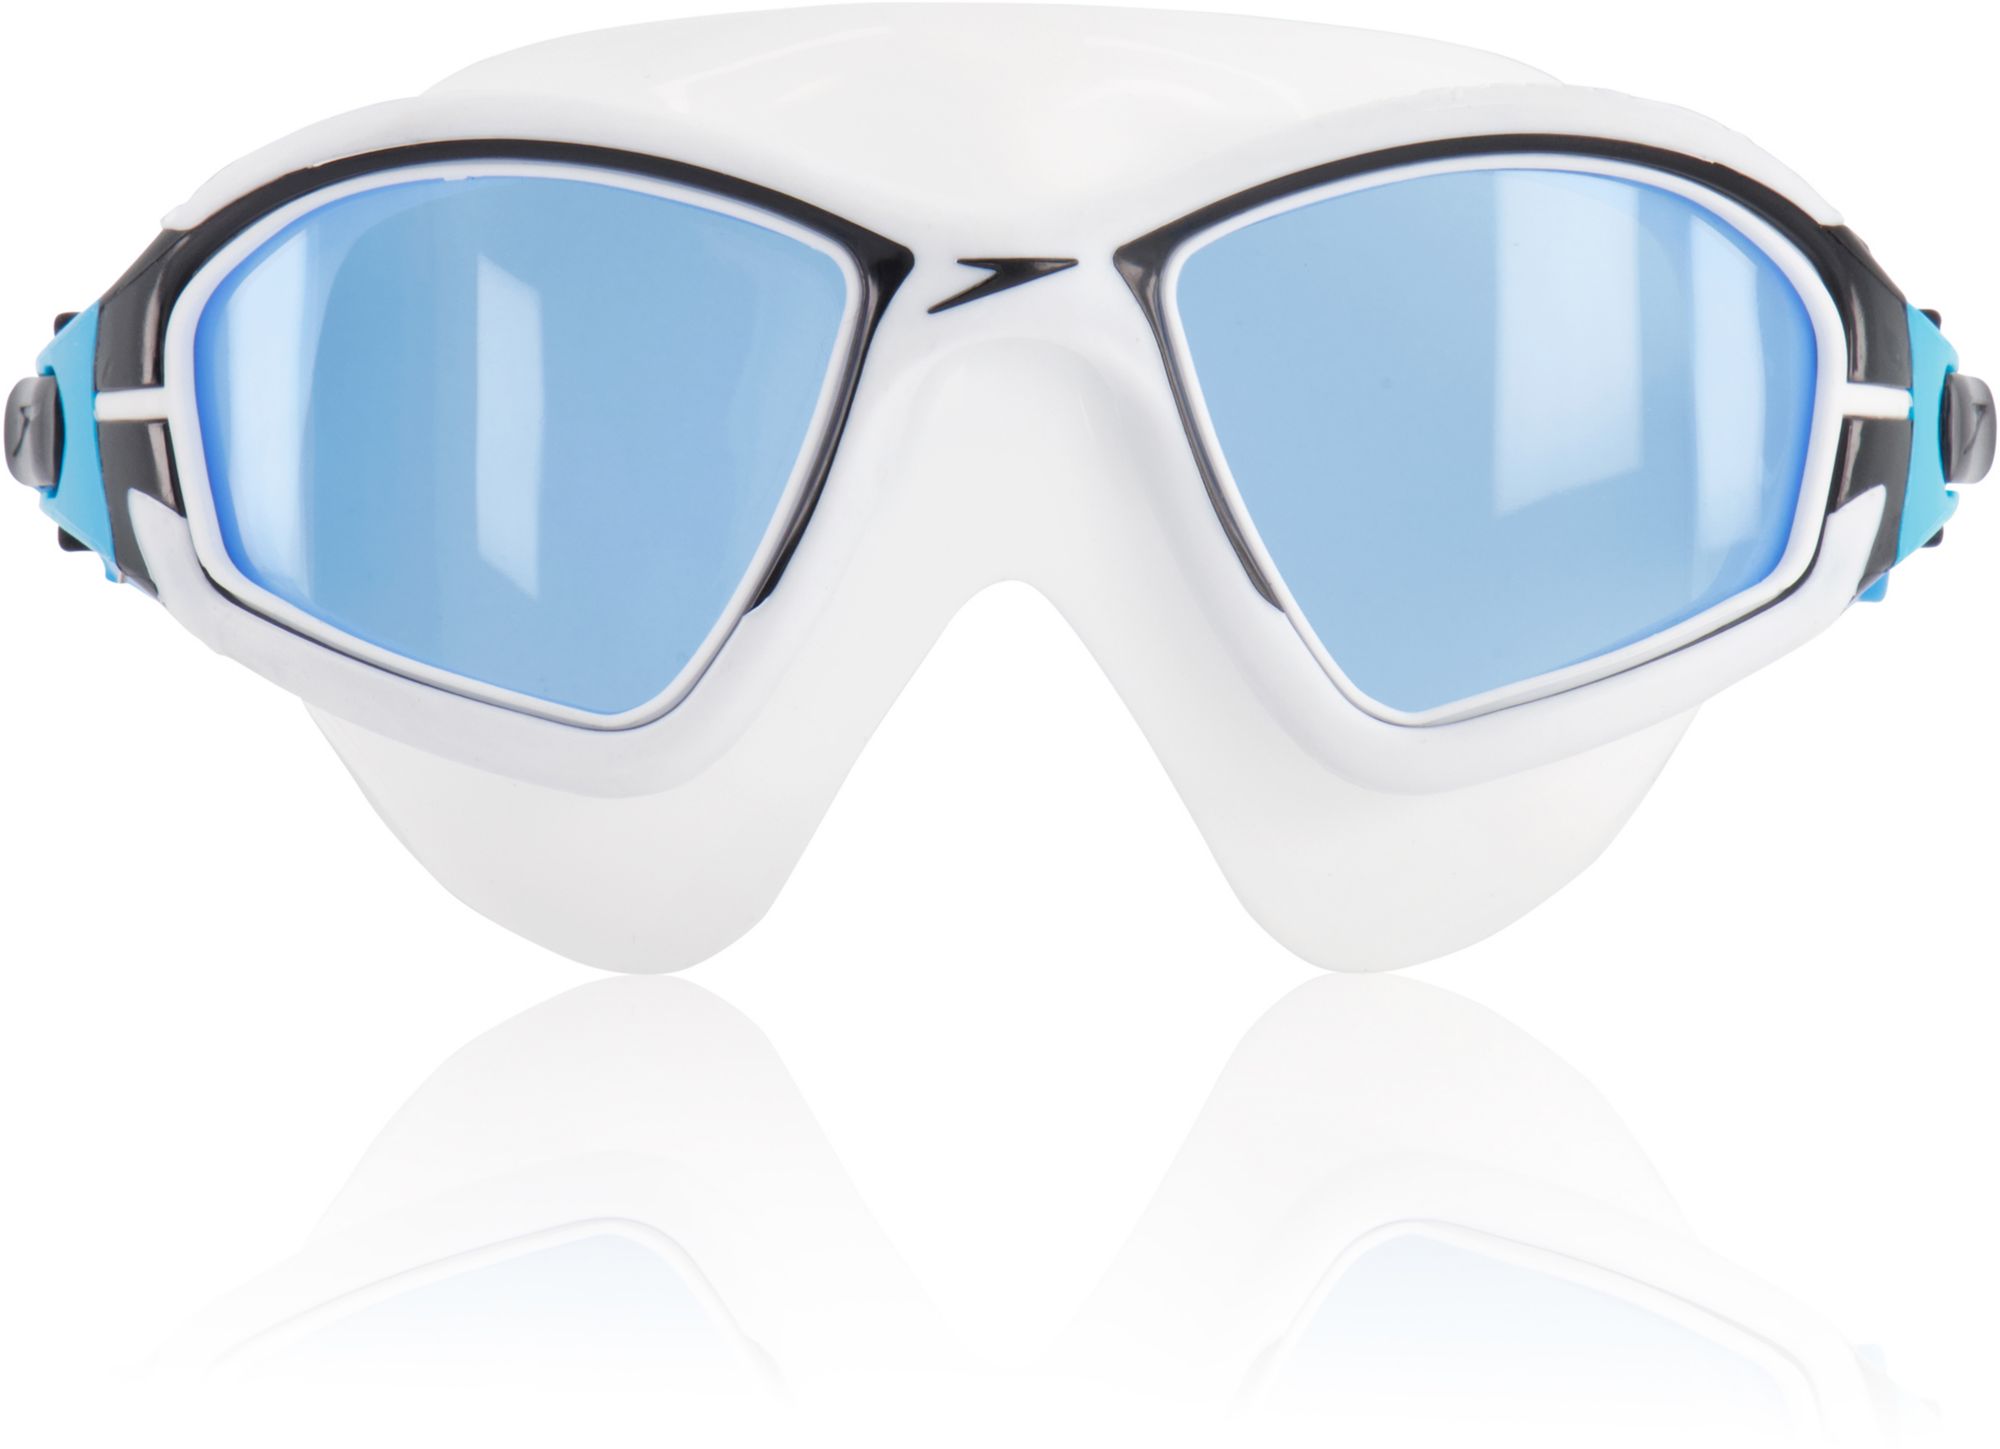 Speedo Adult Proview Mask Swim Goggles